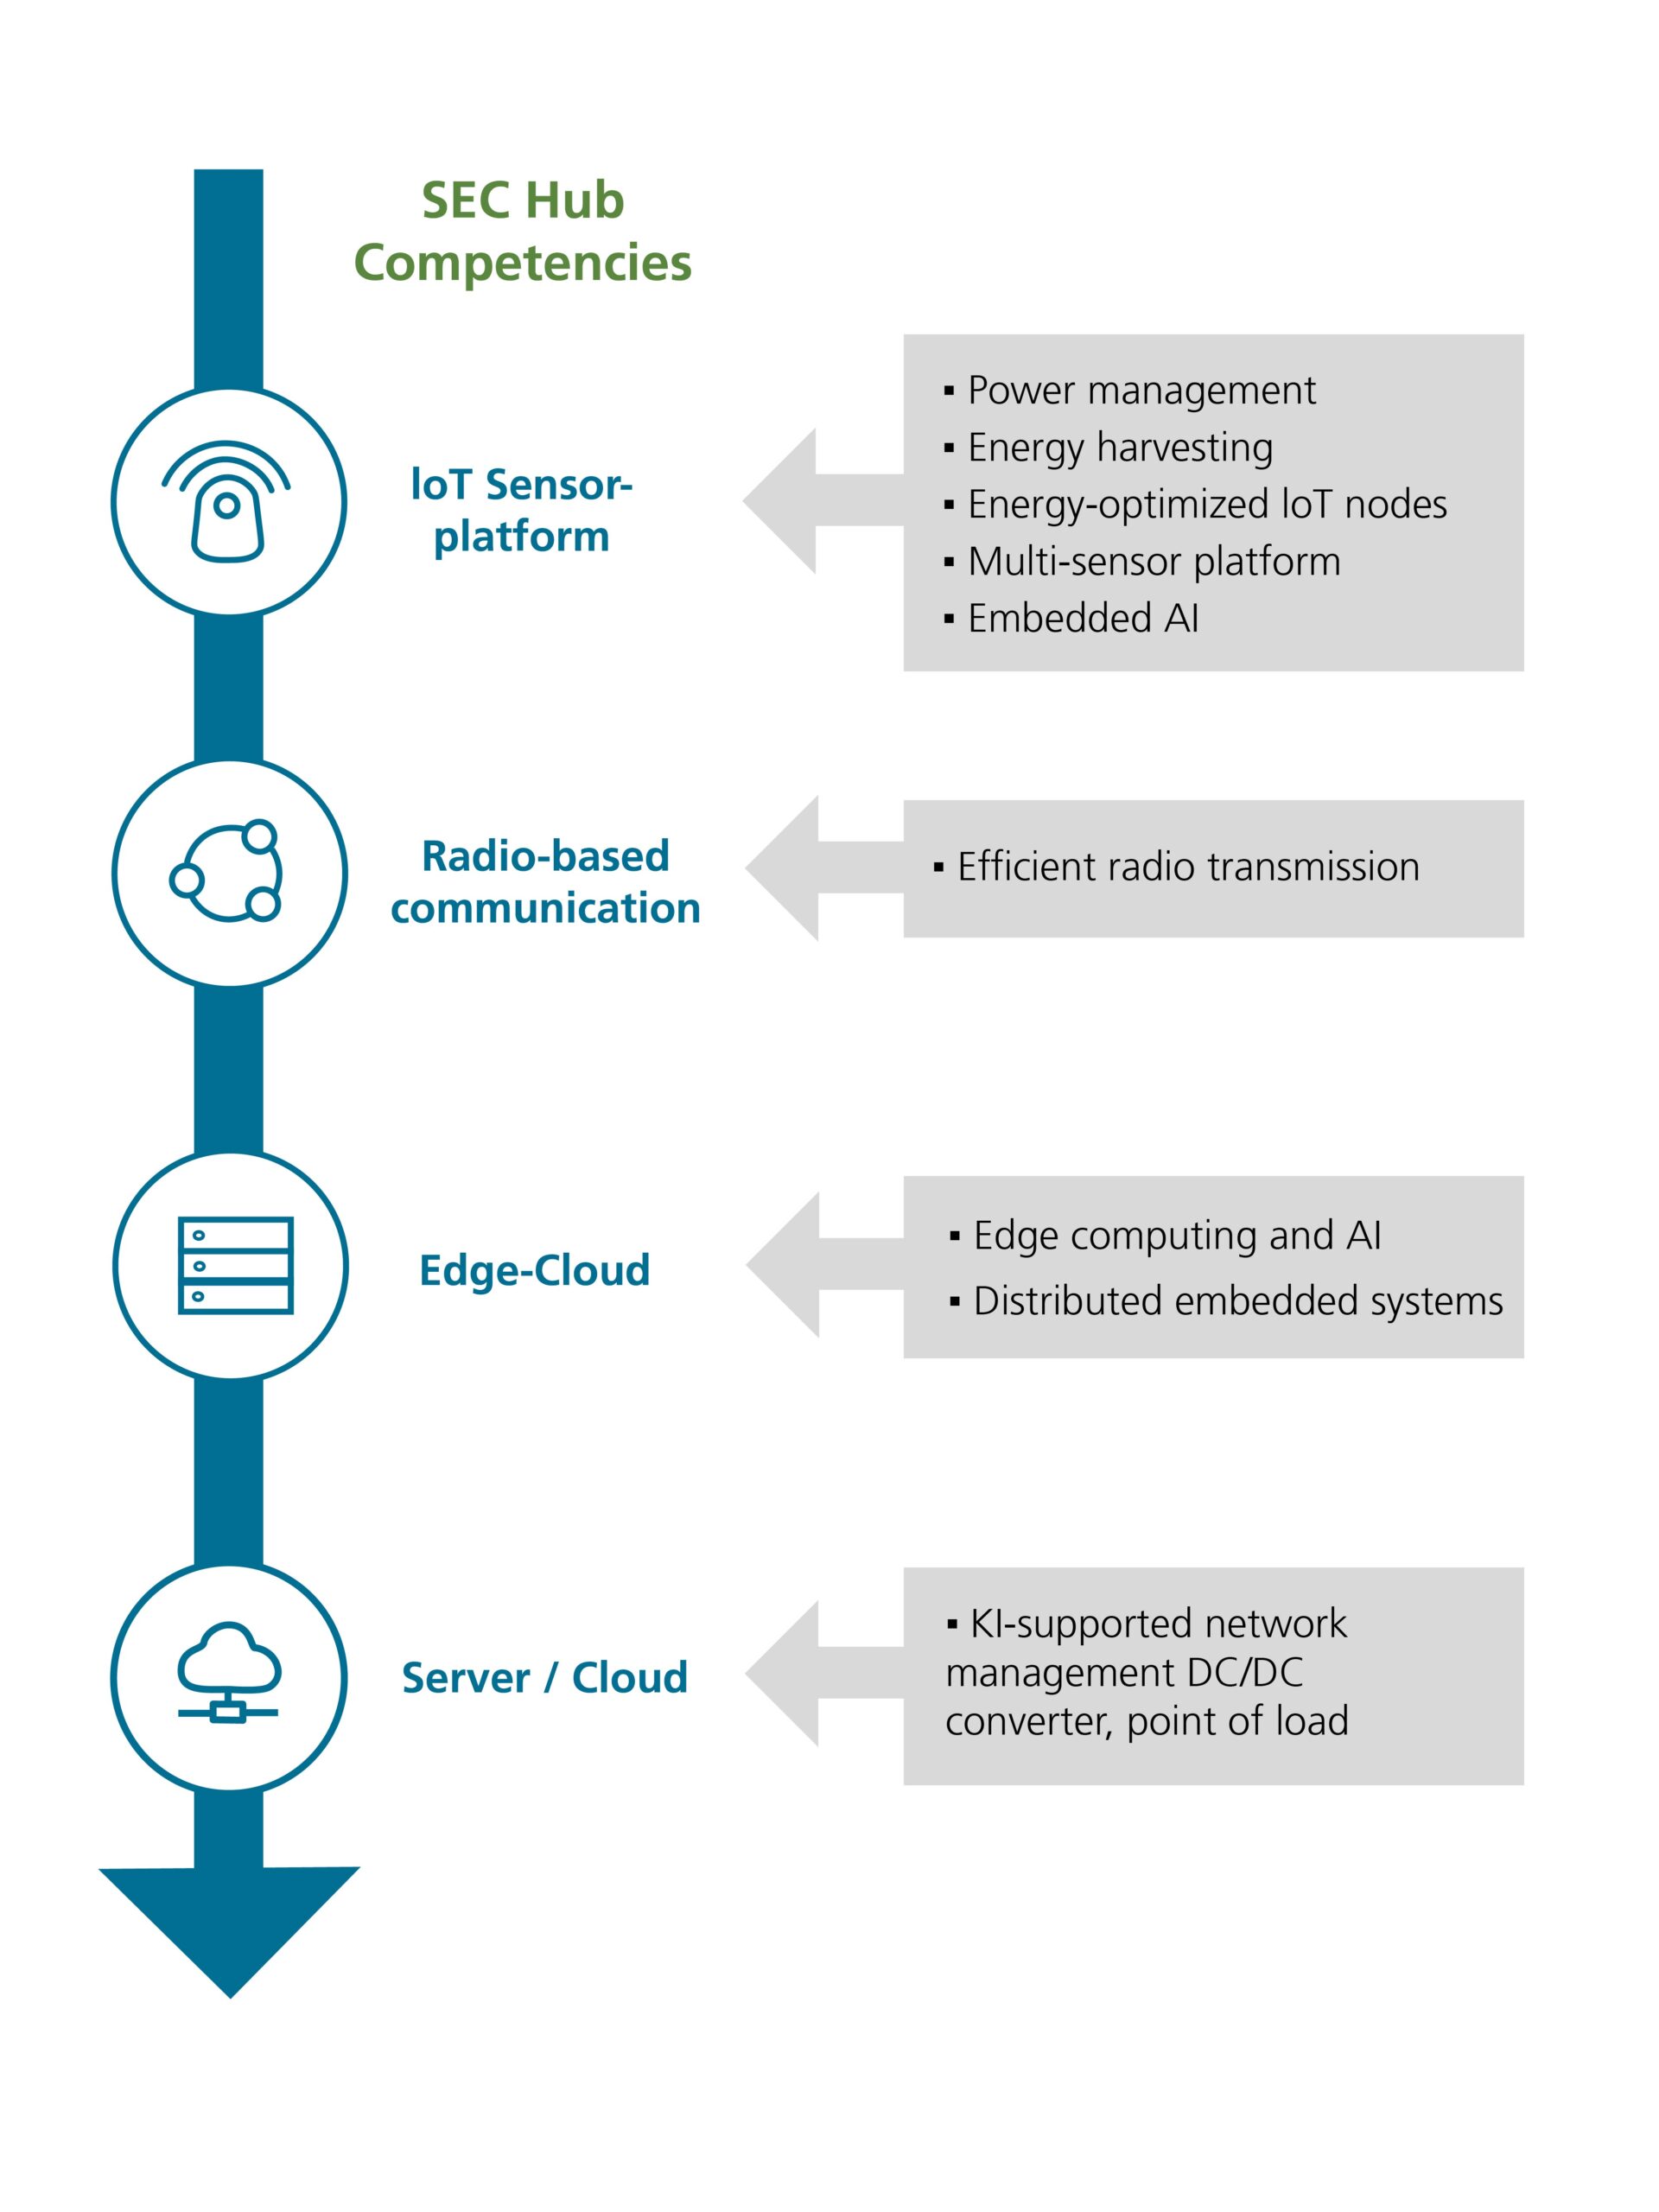 Darstellung der Kompetenzen des Sensor-Edge-Cloud-Hubs: IoT Sensor Plattform, Funkbasierte Kommunikation, Edge-Cloud, Server/Cloud